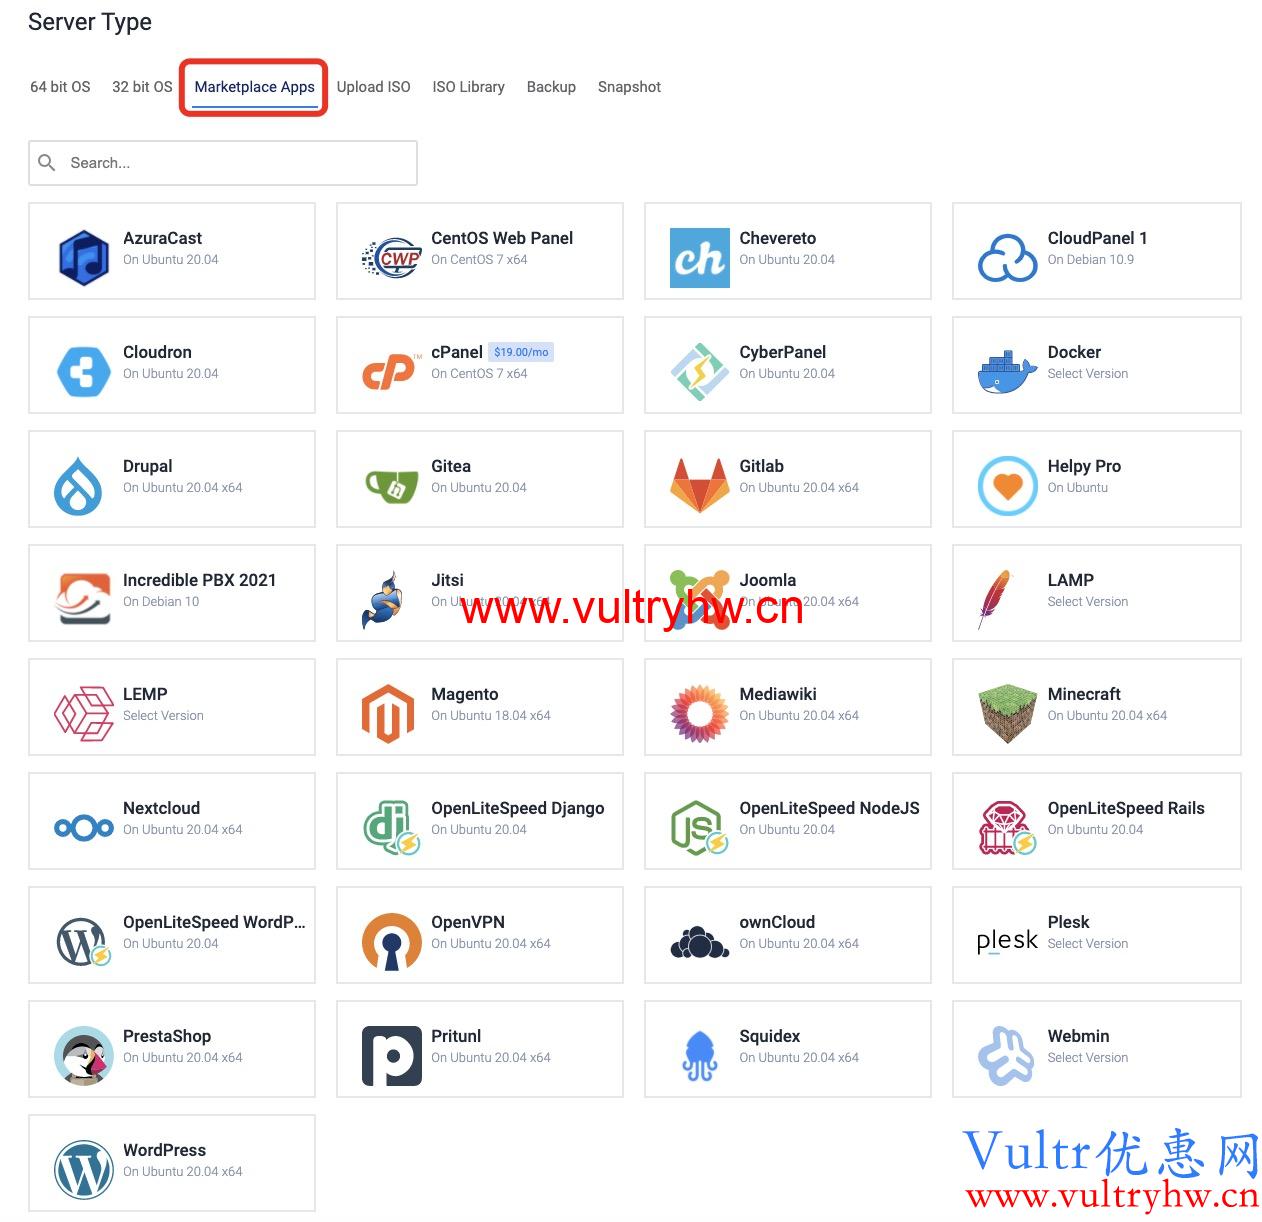 Vultr Marketplace Apps